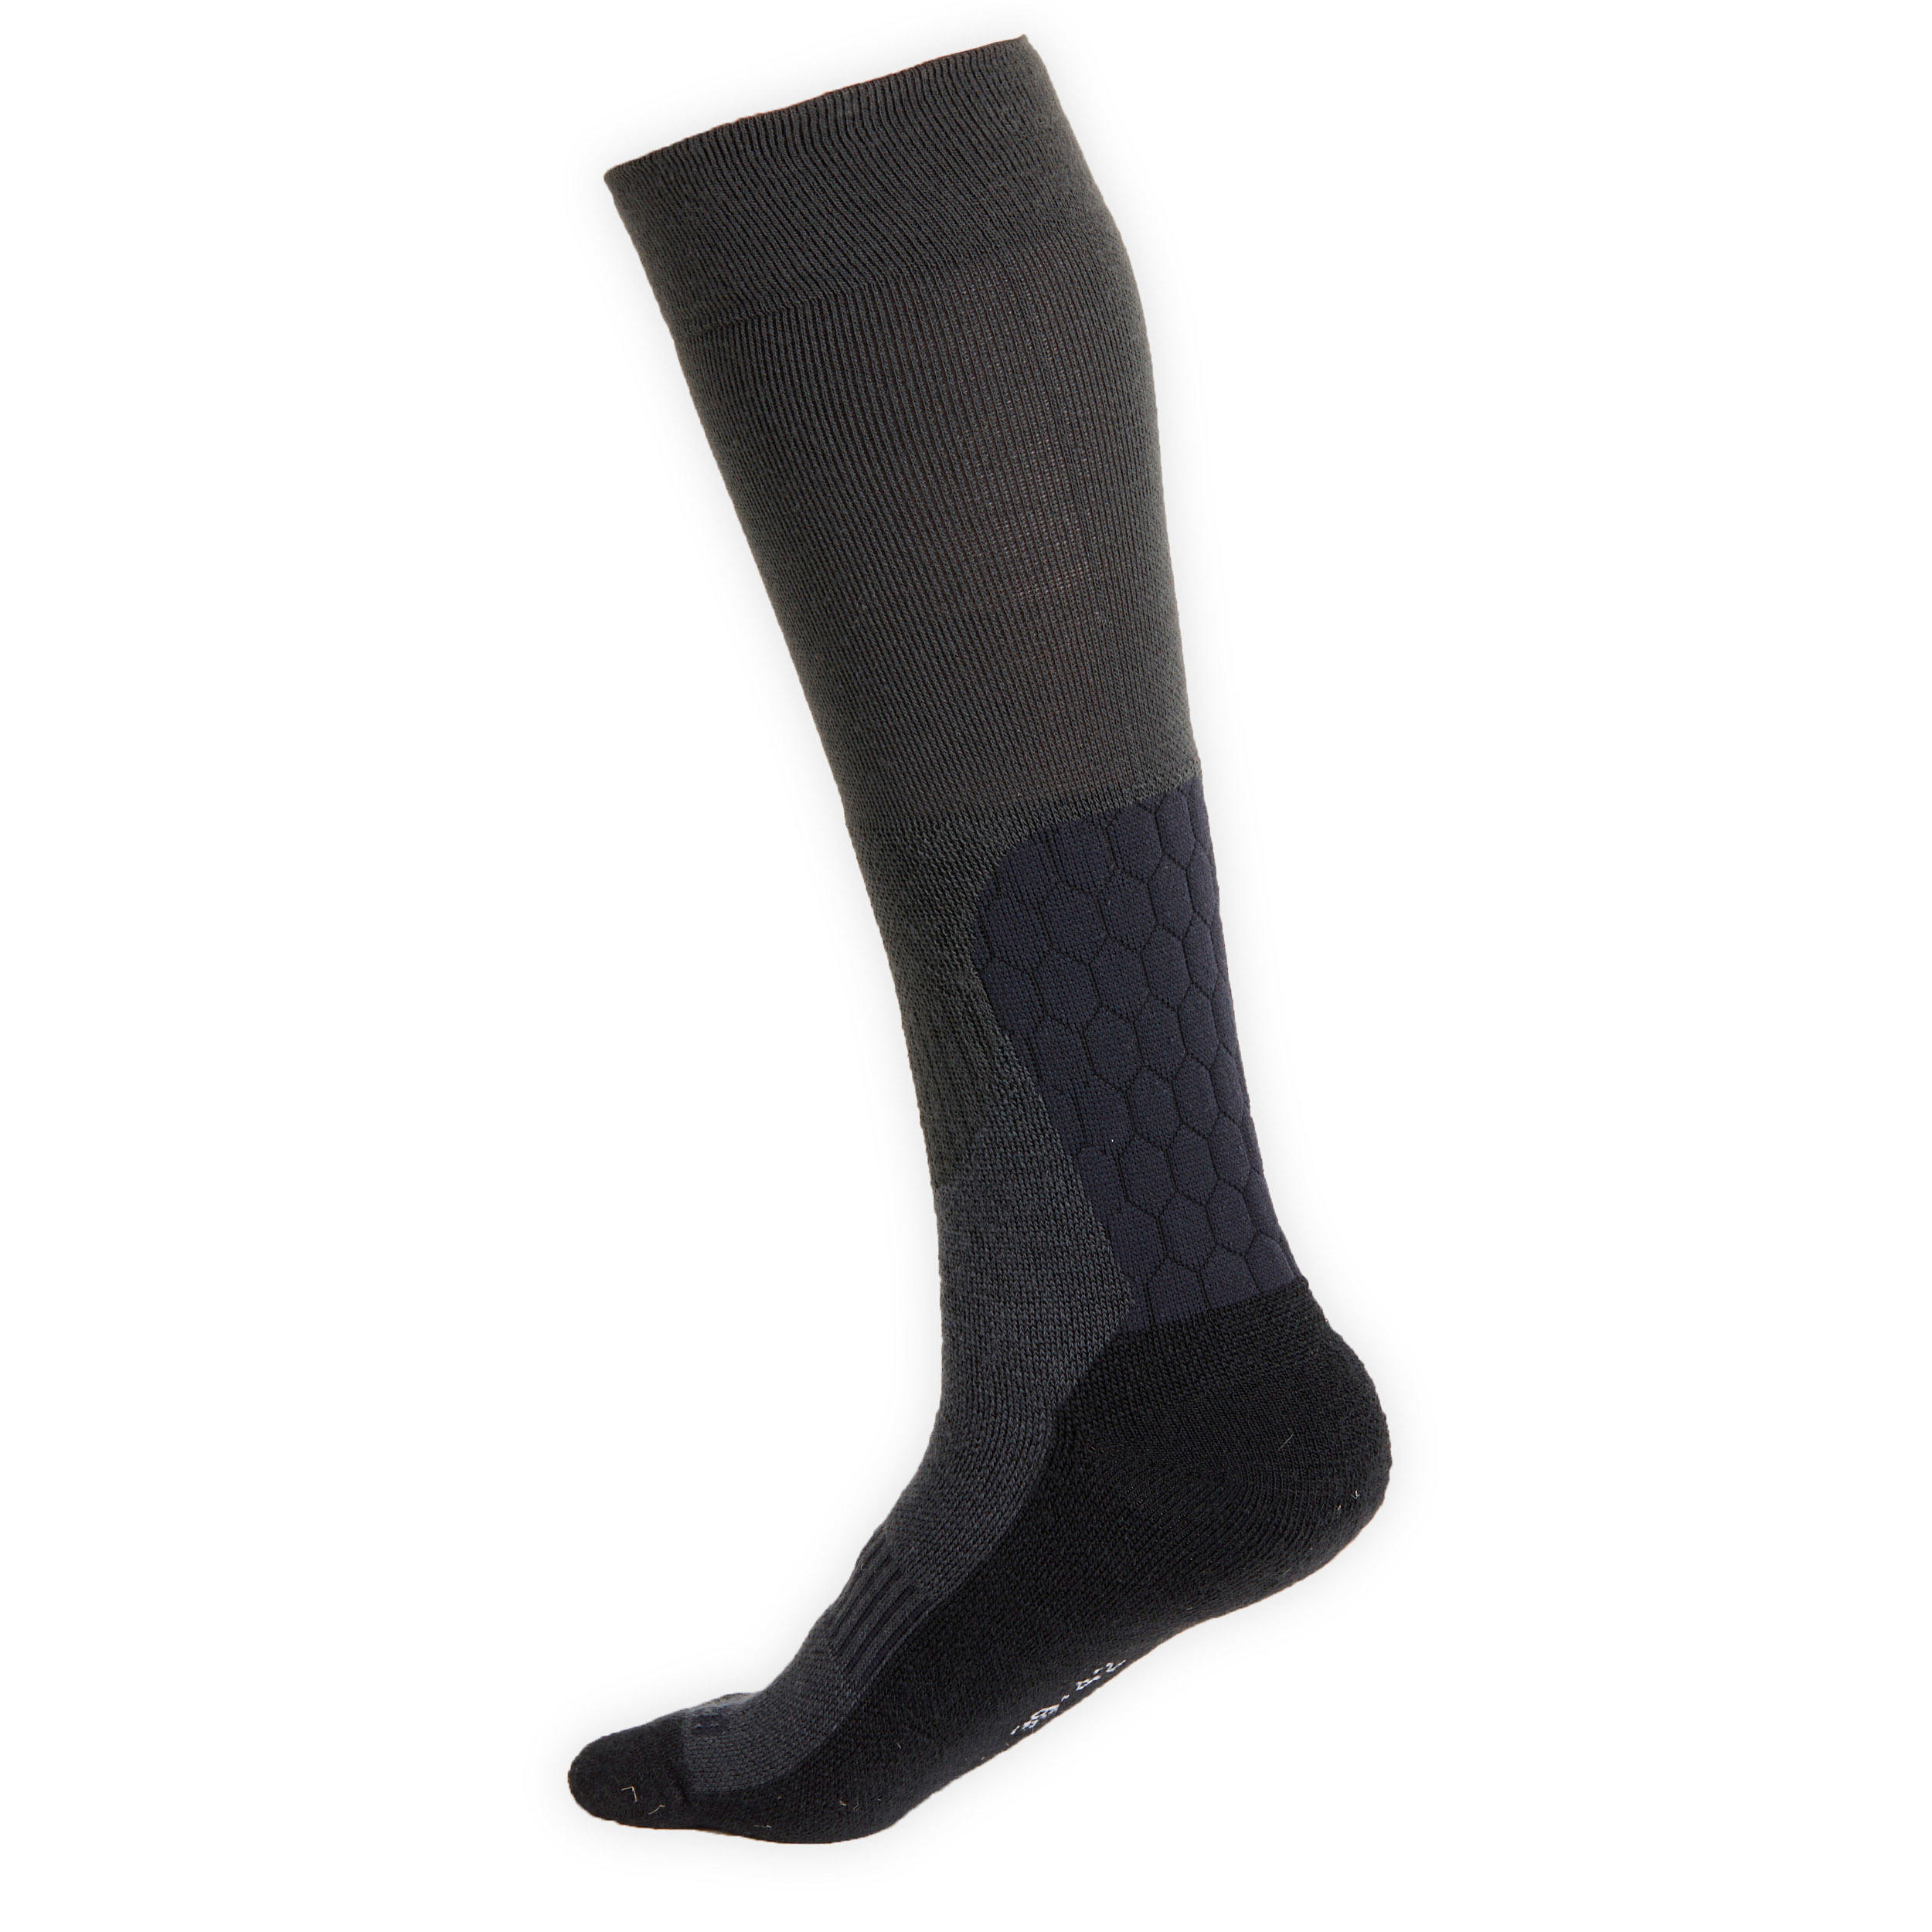 Adult Horse Riding Socks 500 Warm - Grey/Black 2/5